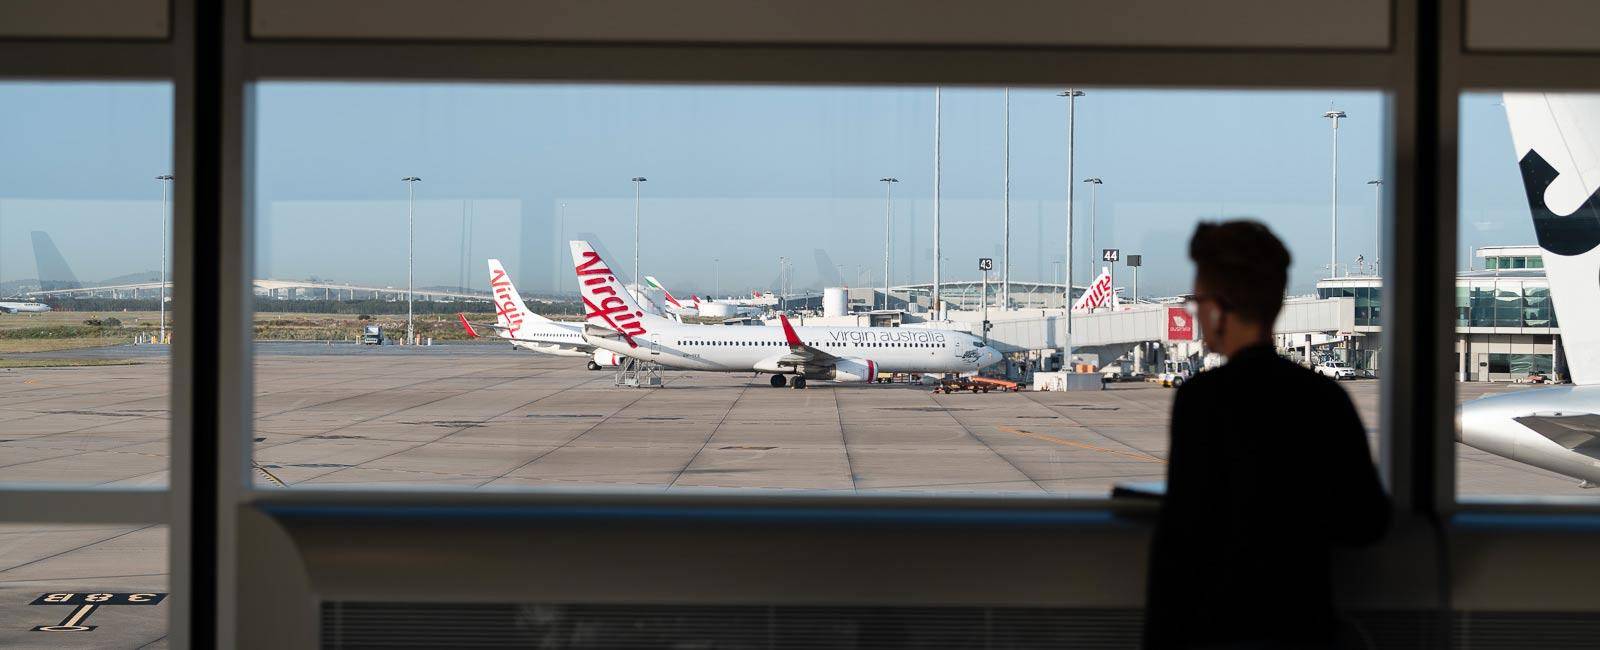 Domestic Terminal looking out at aircraft